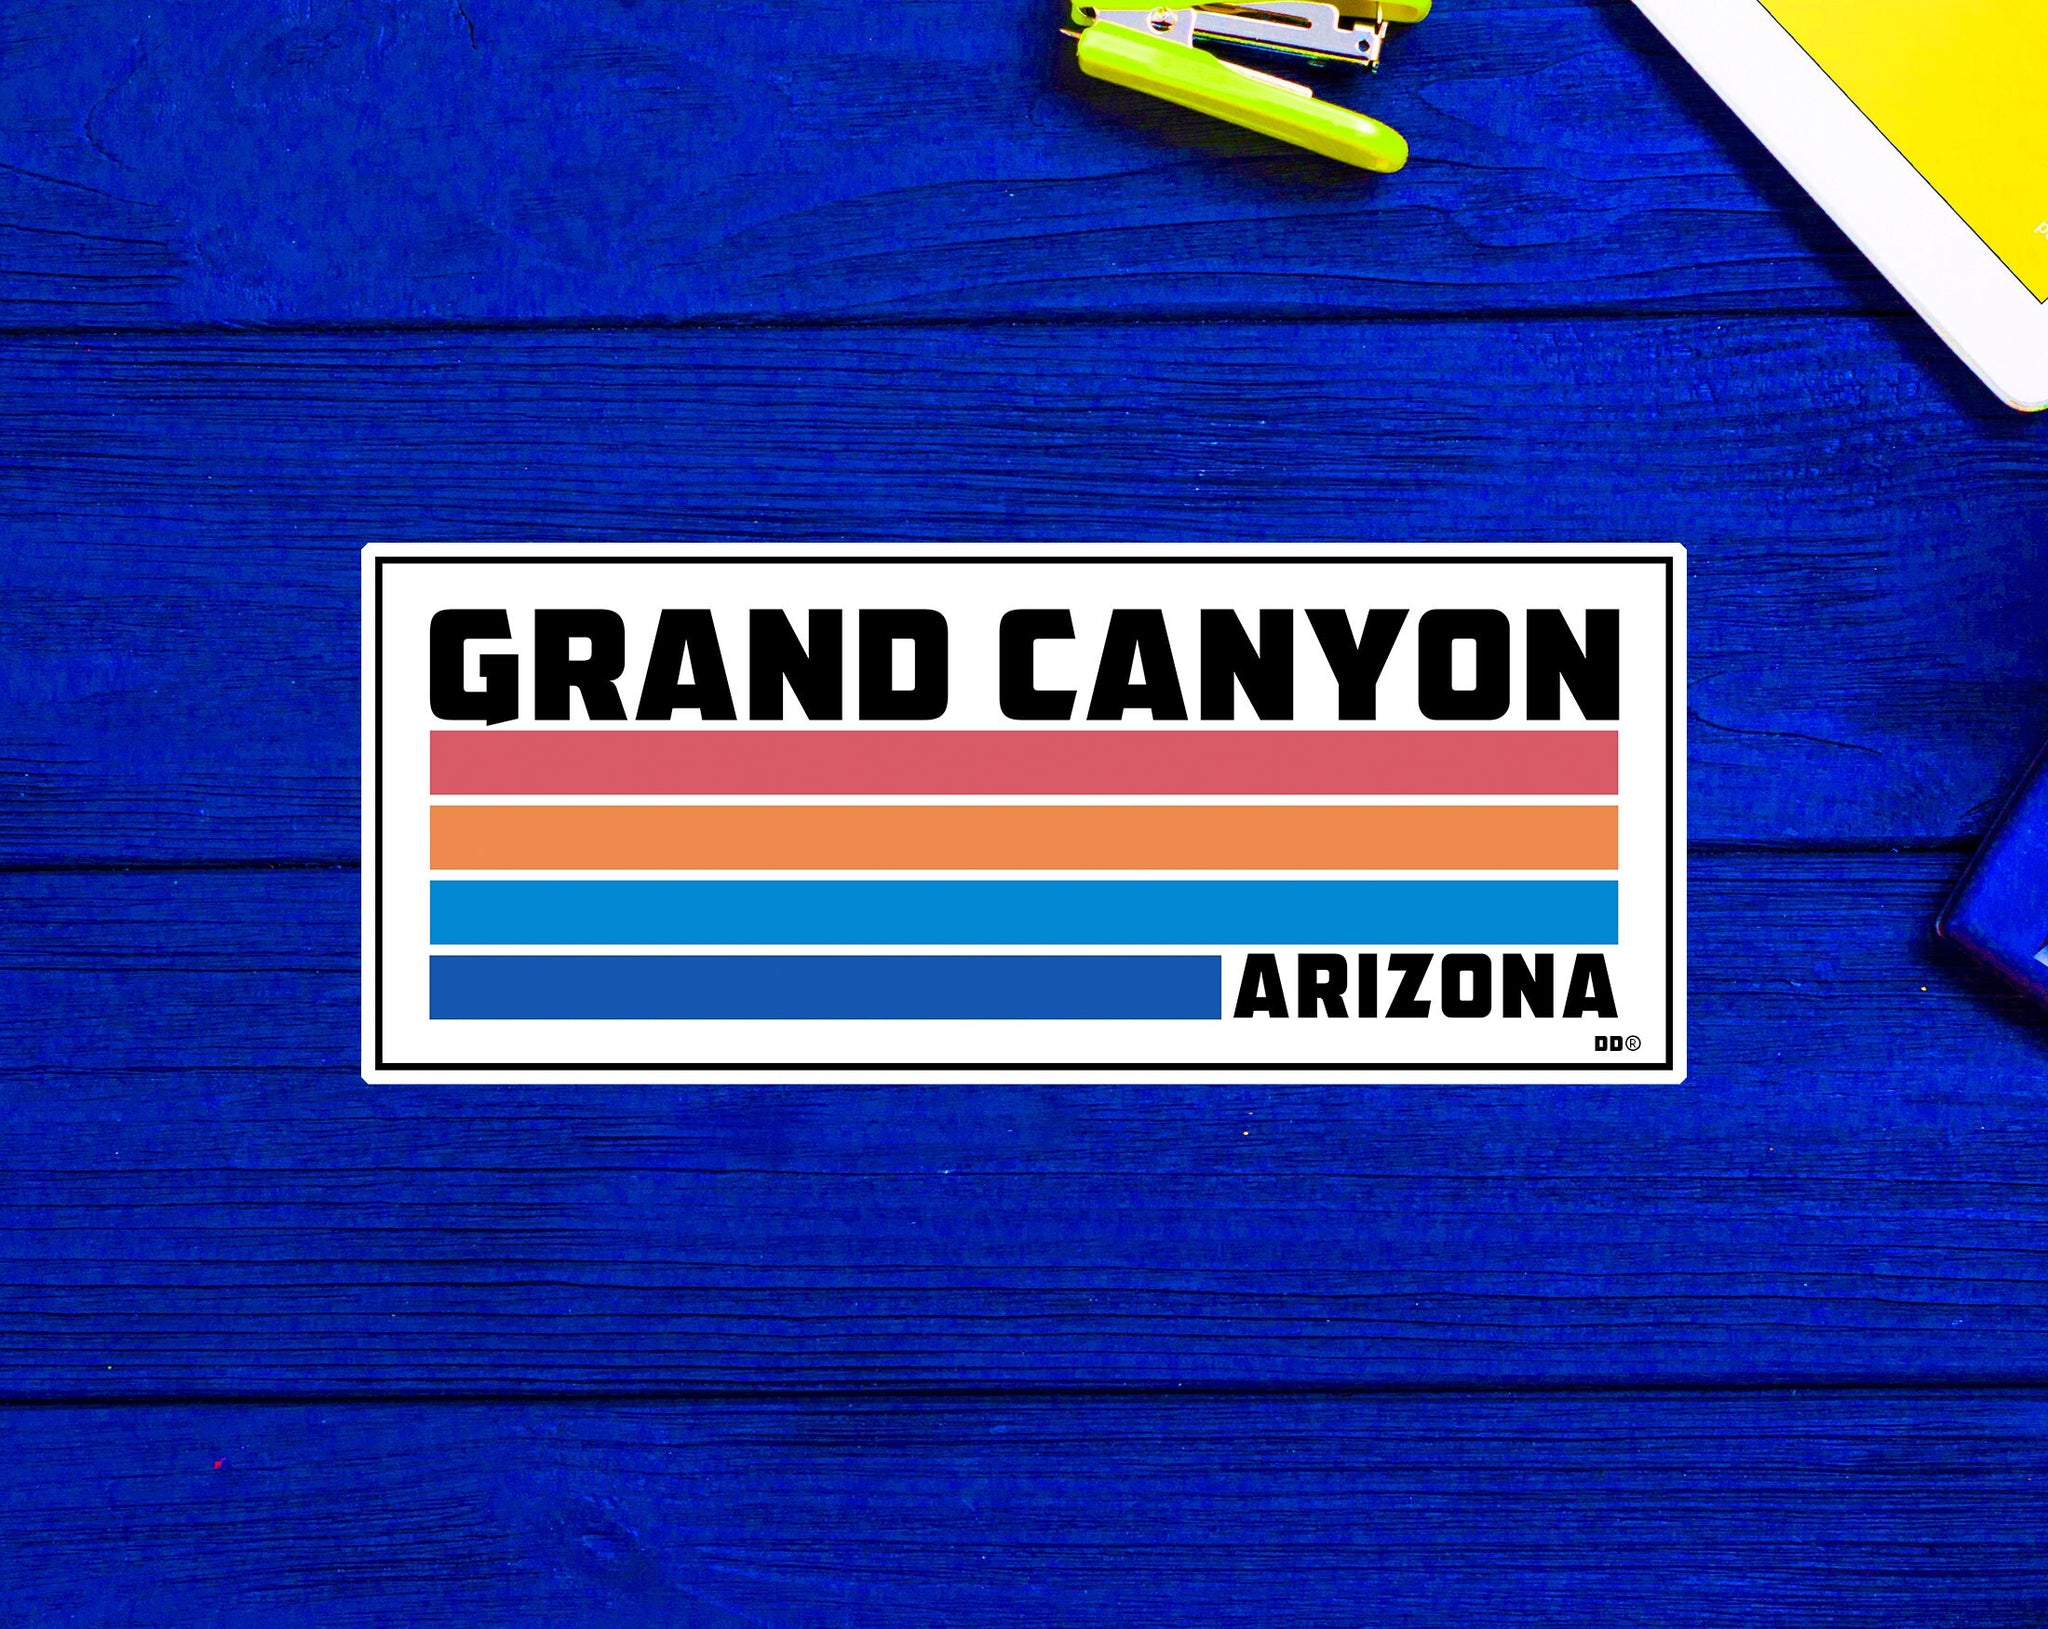 Grand Canyon National Park Arizona Decal Sticker 3.75" x 1.5" Vinyl Indoor Outdoor